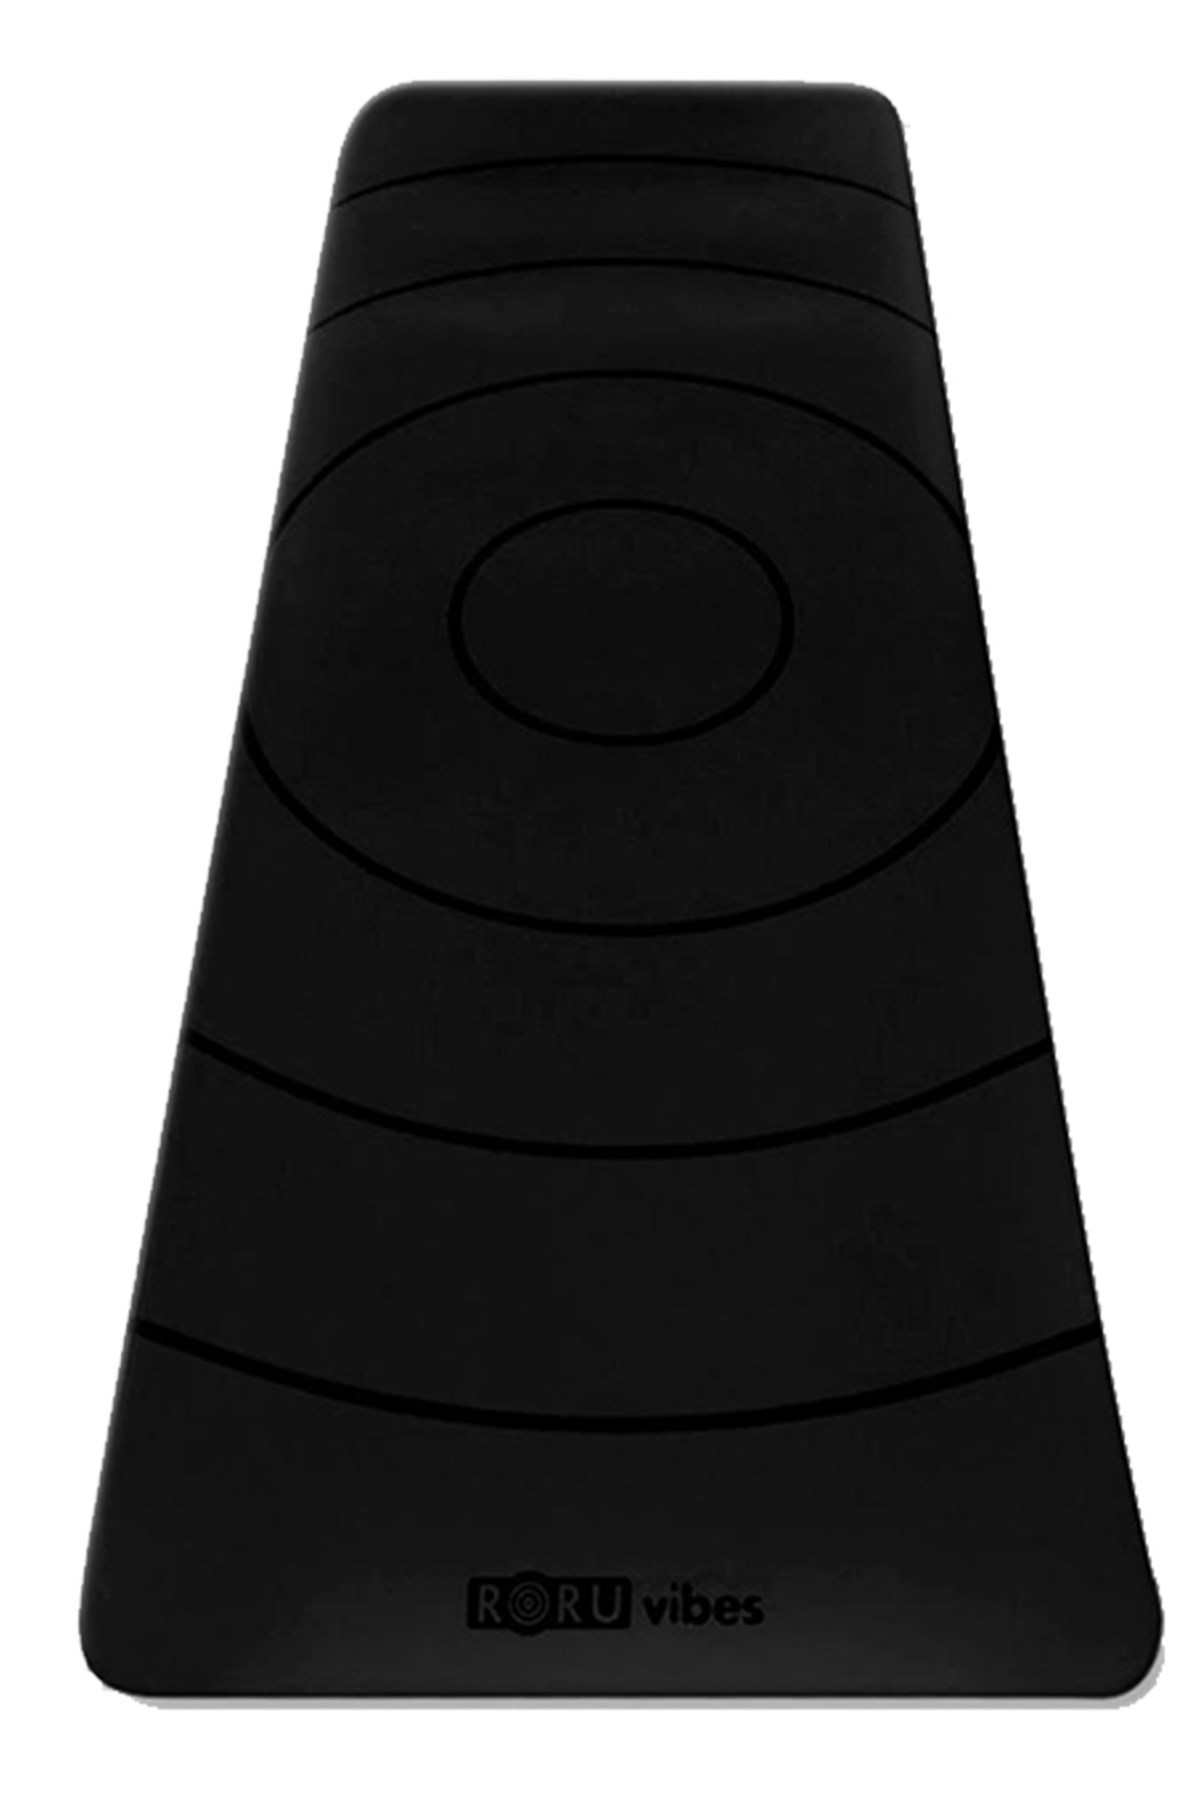 RORU Sun Series Siyah 5 mm Yoga Matı